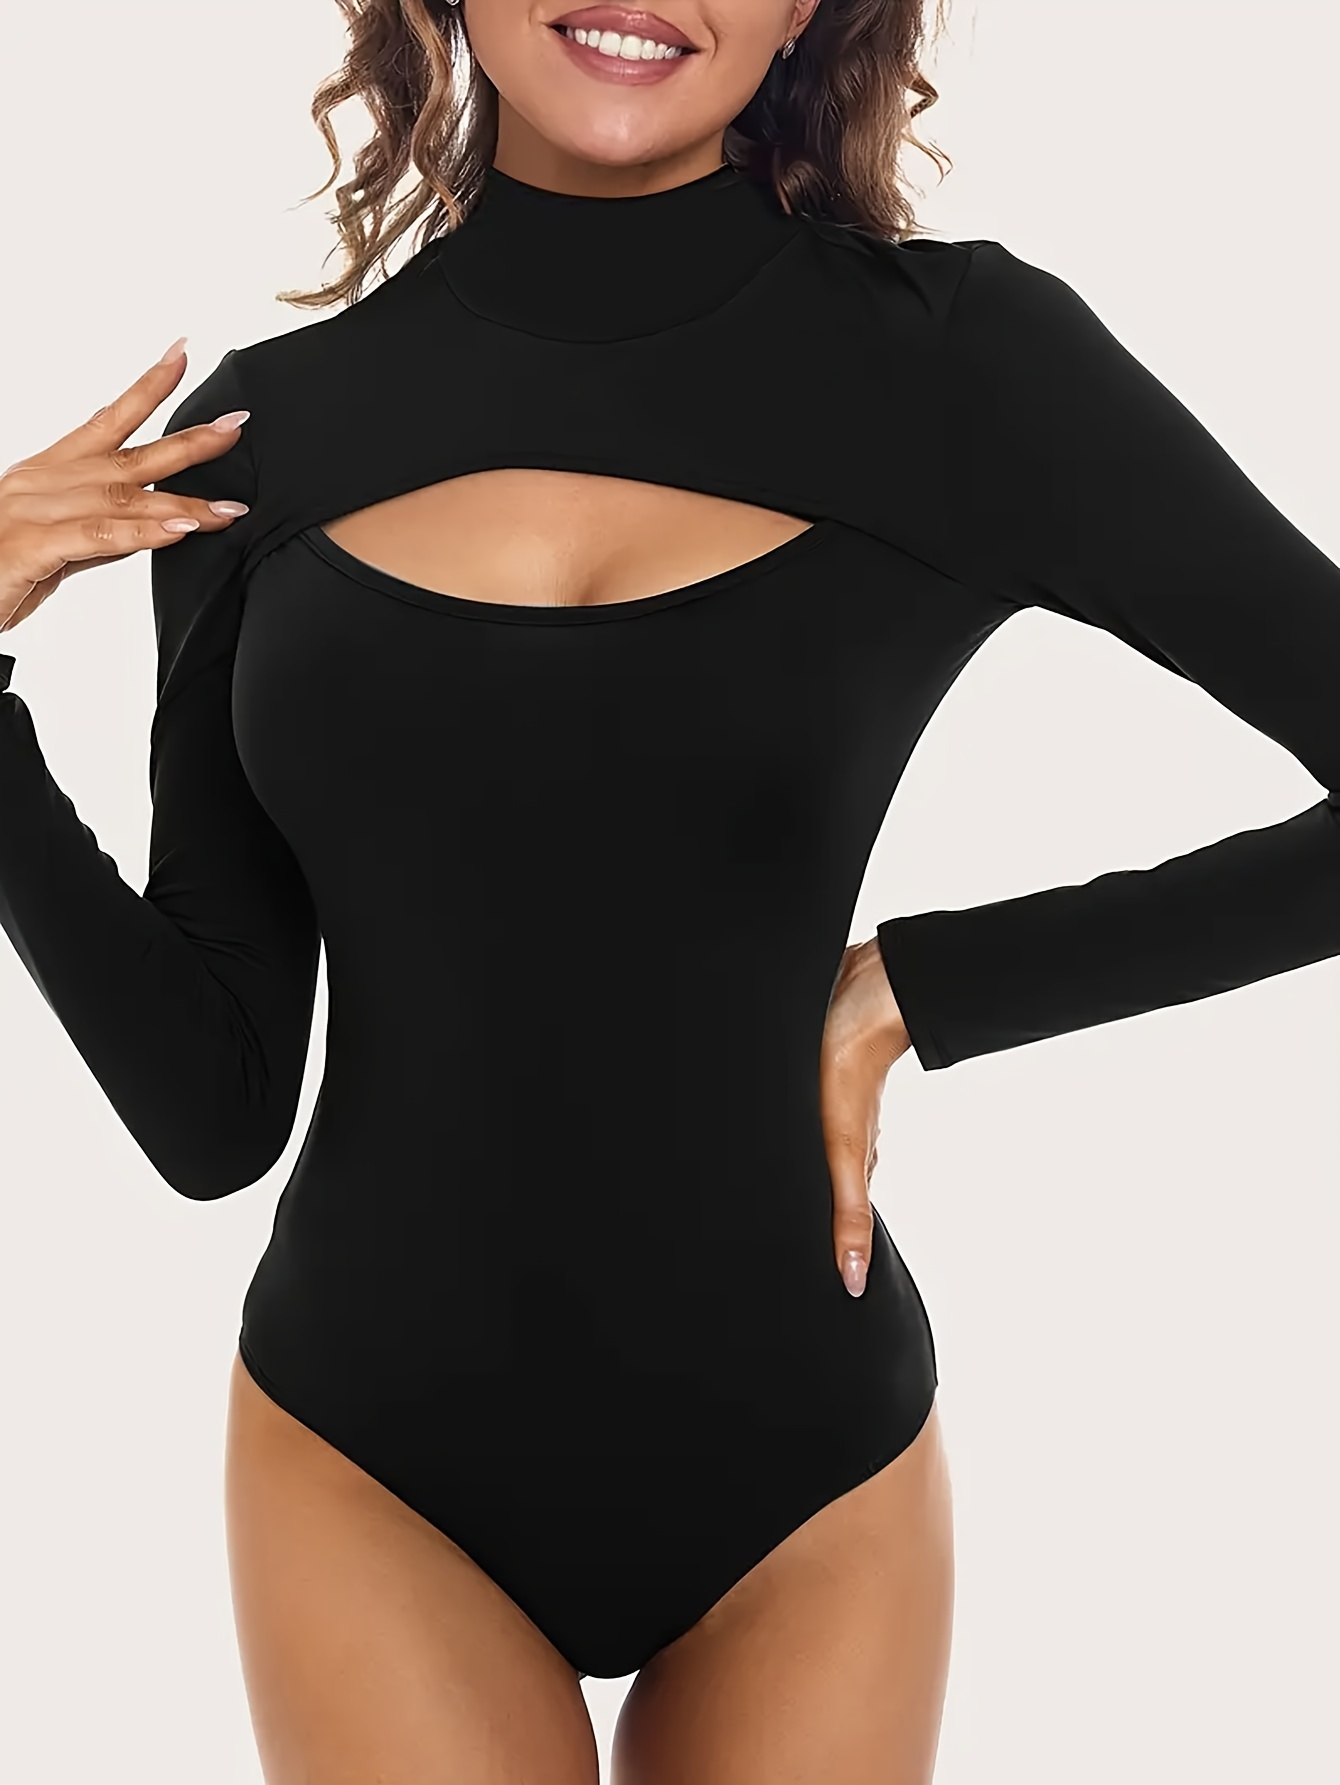 EUYZOU Women Tummy Control Shapewear Bodysuit Long Sleeve Thermal